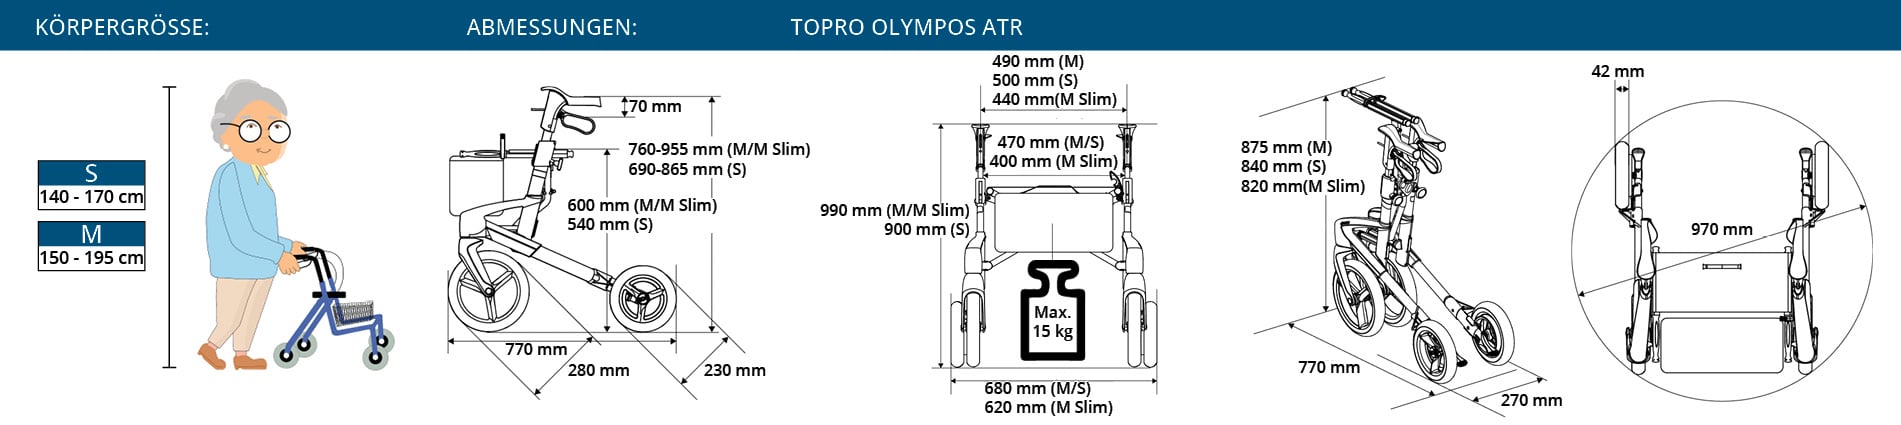 Desktop-Technische-Daten-Topro-Olympos-ATR-Bildgrafik-Oma-Lenchen_1